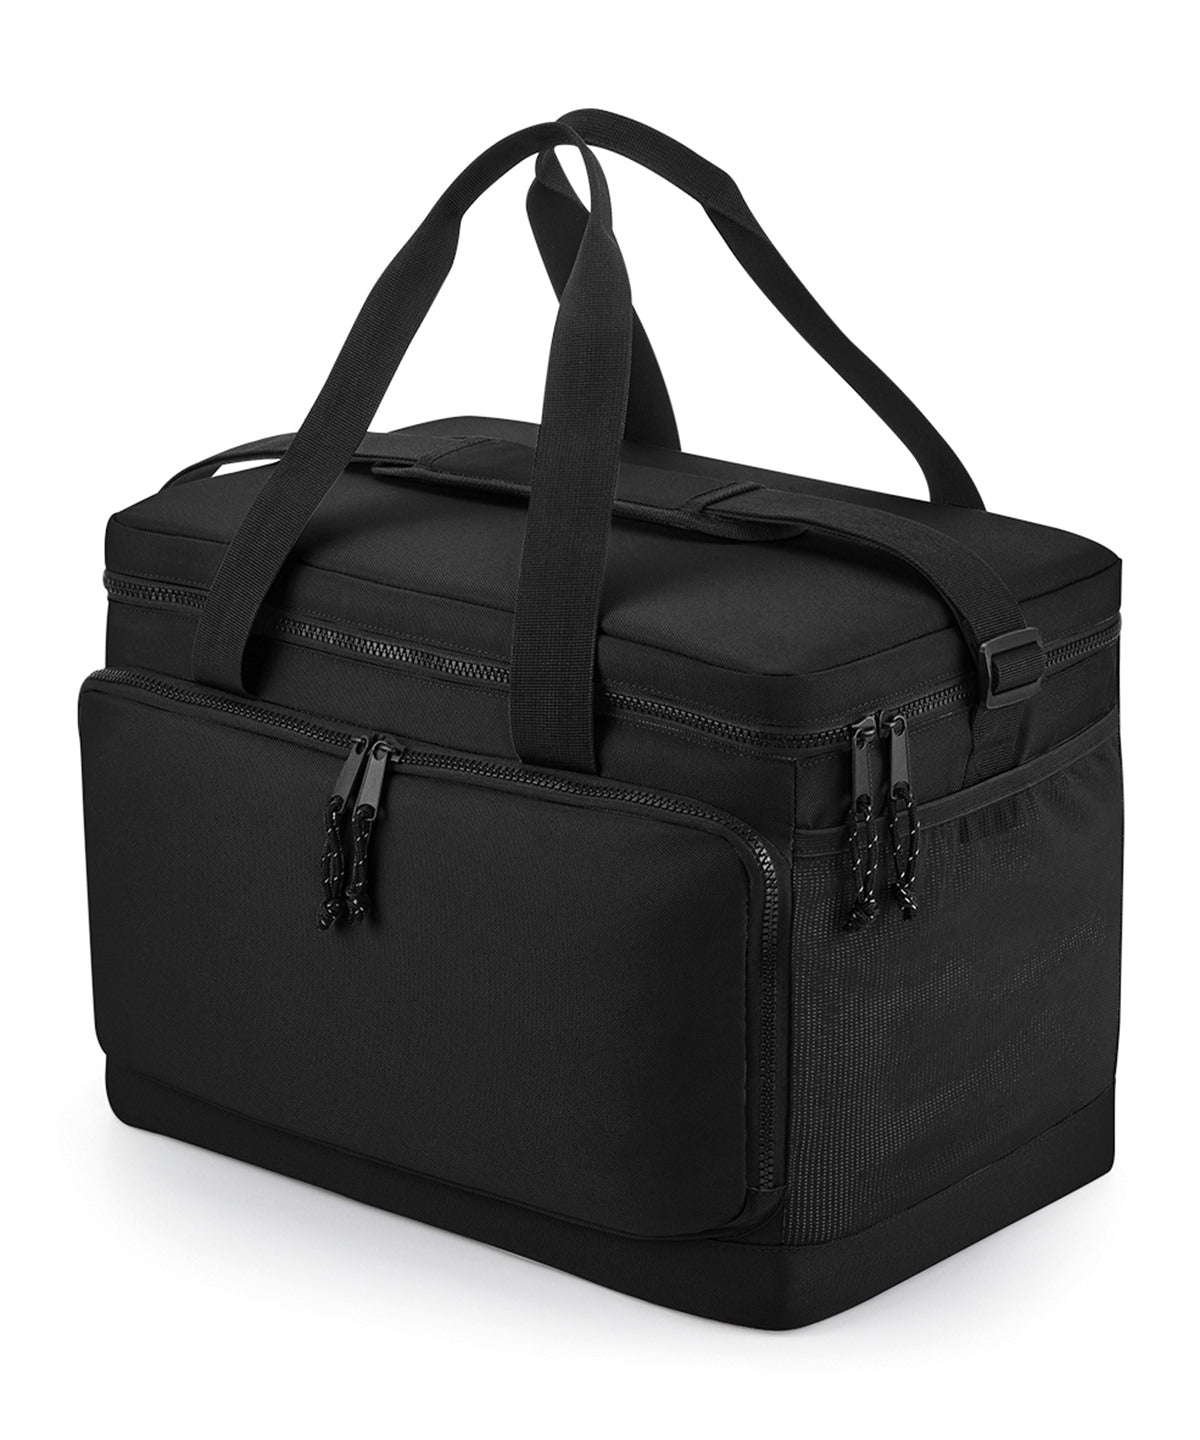 Personalised Bags - Black Bagbase Recycled large cooler shoulder bag